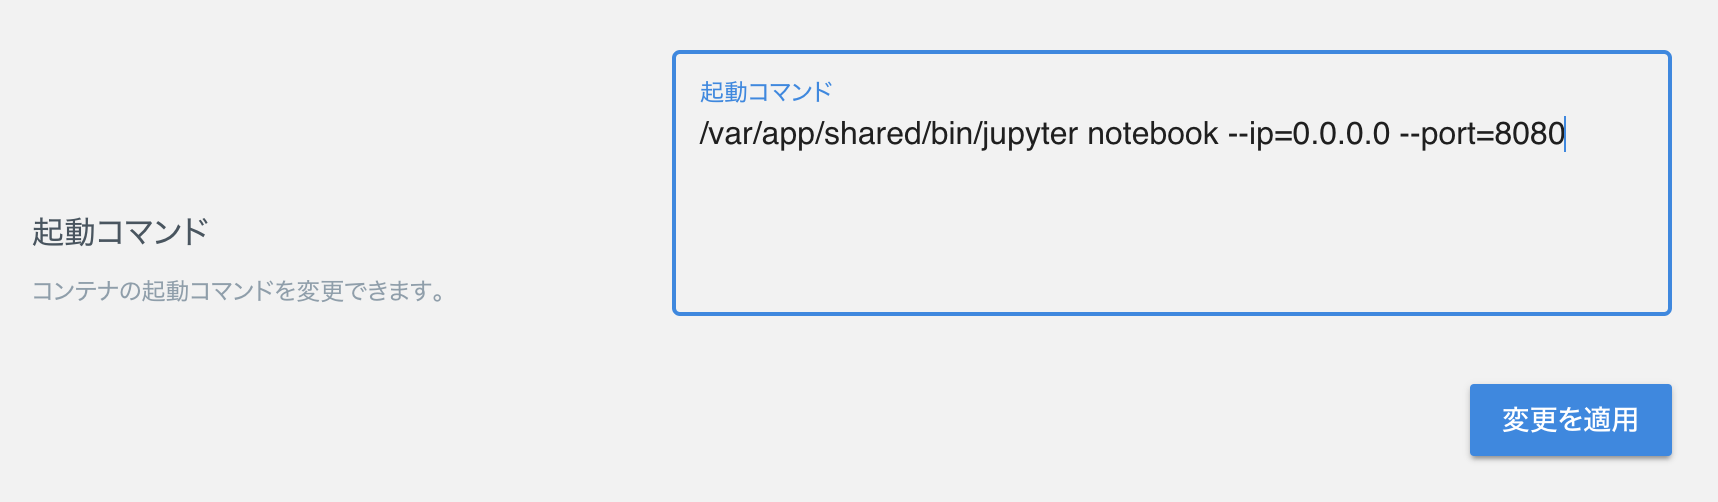 command-input-jupyter.png